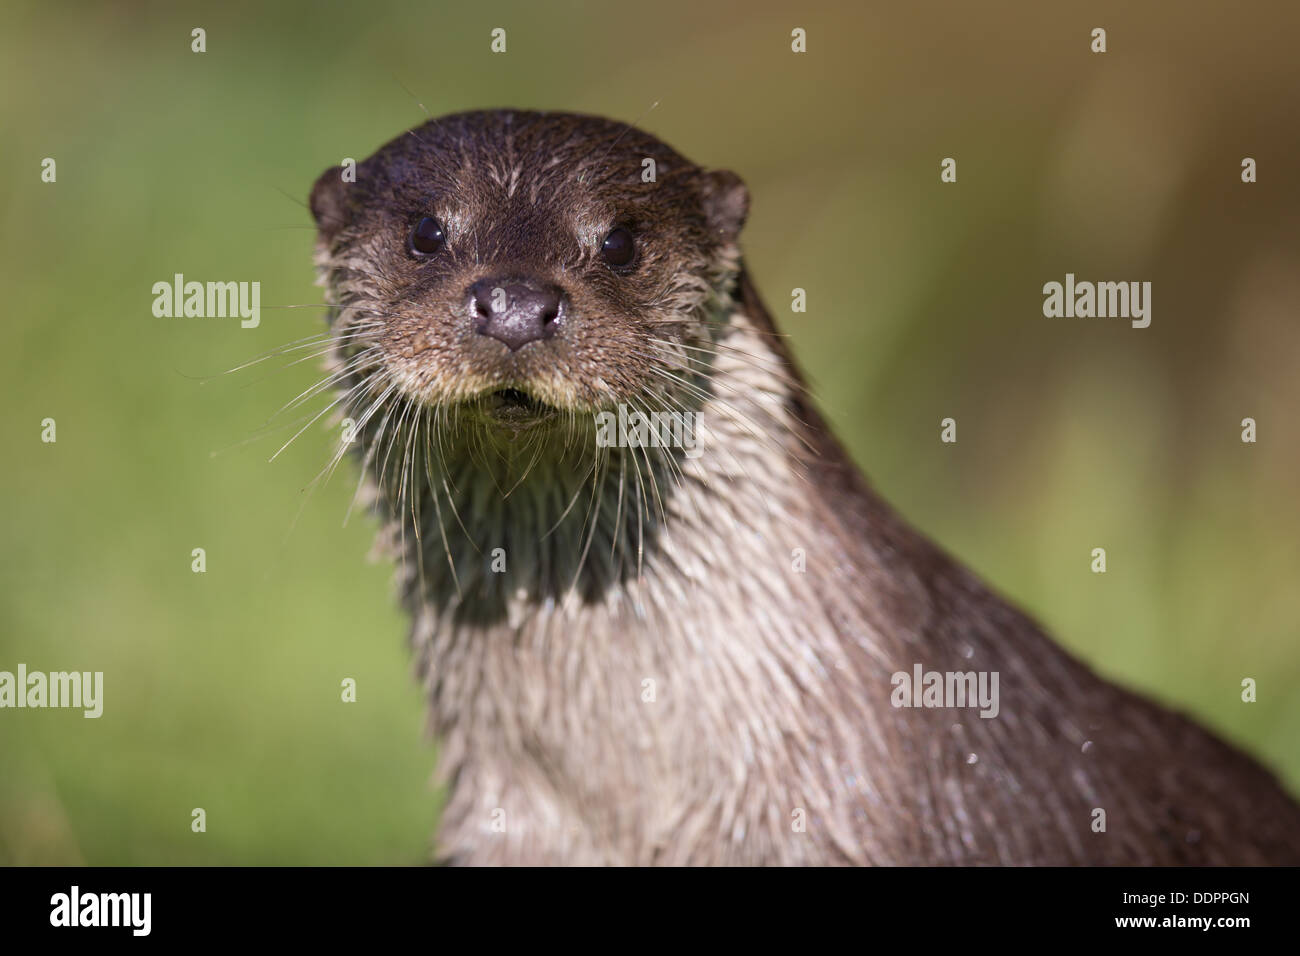 A close up portrait of a european otter Stock Photo